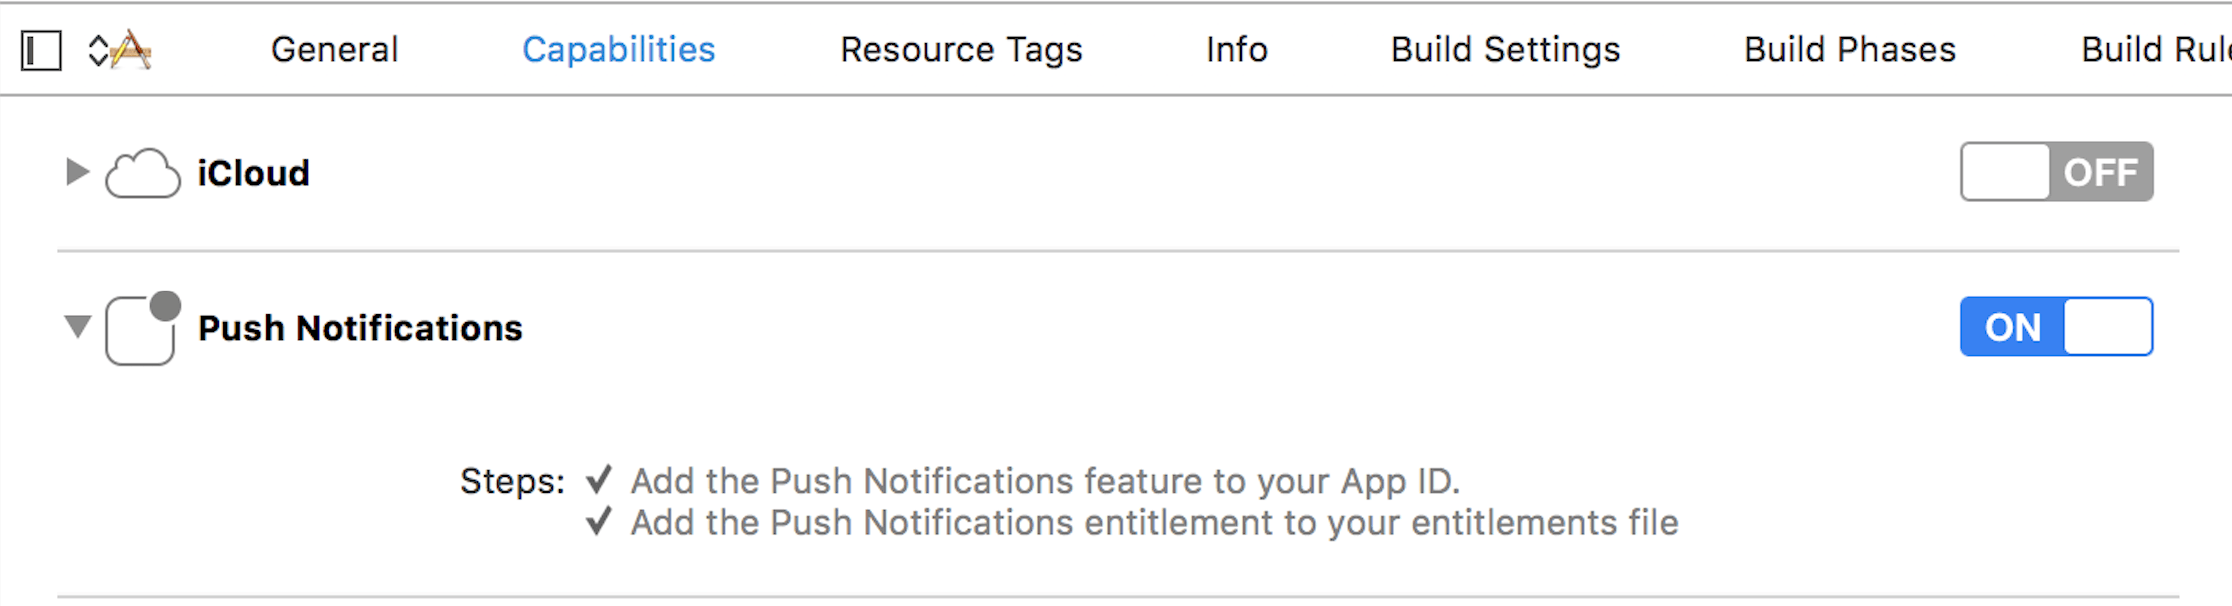 Push Notifications - Slide On